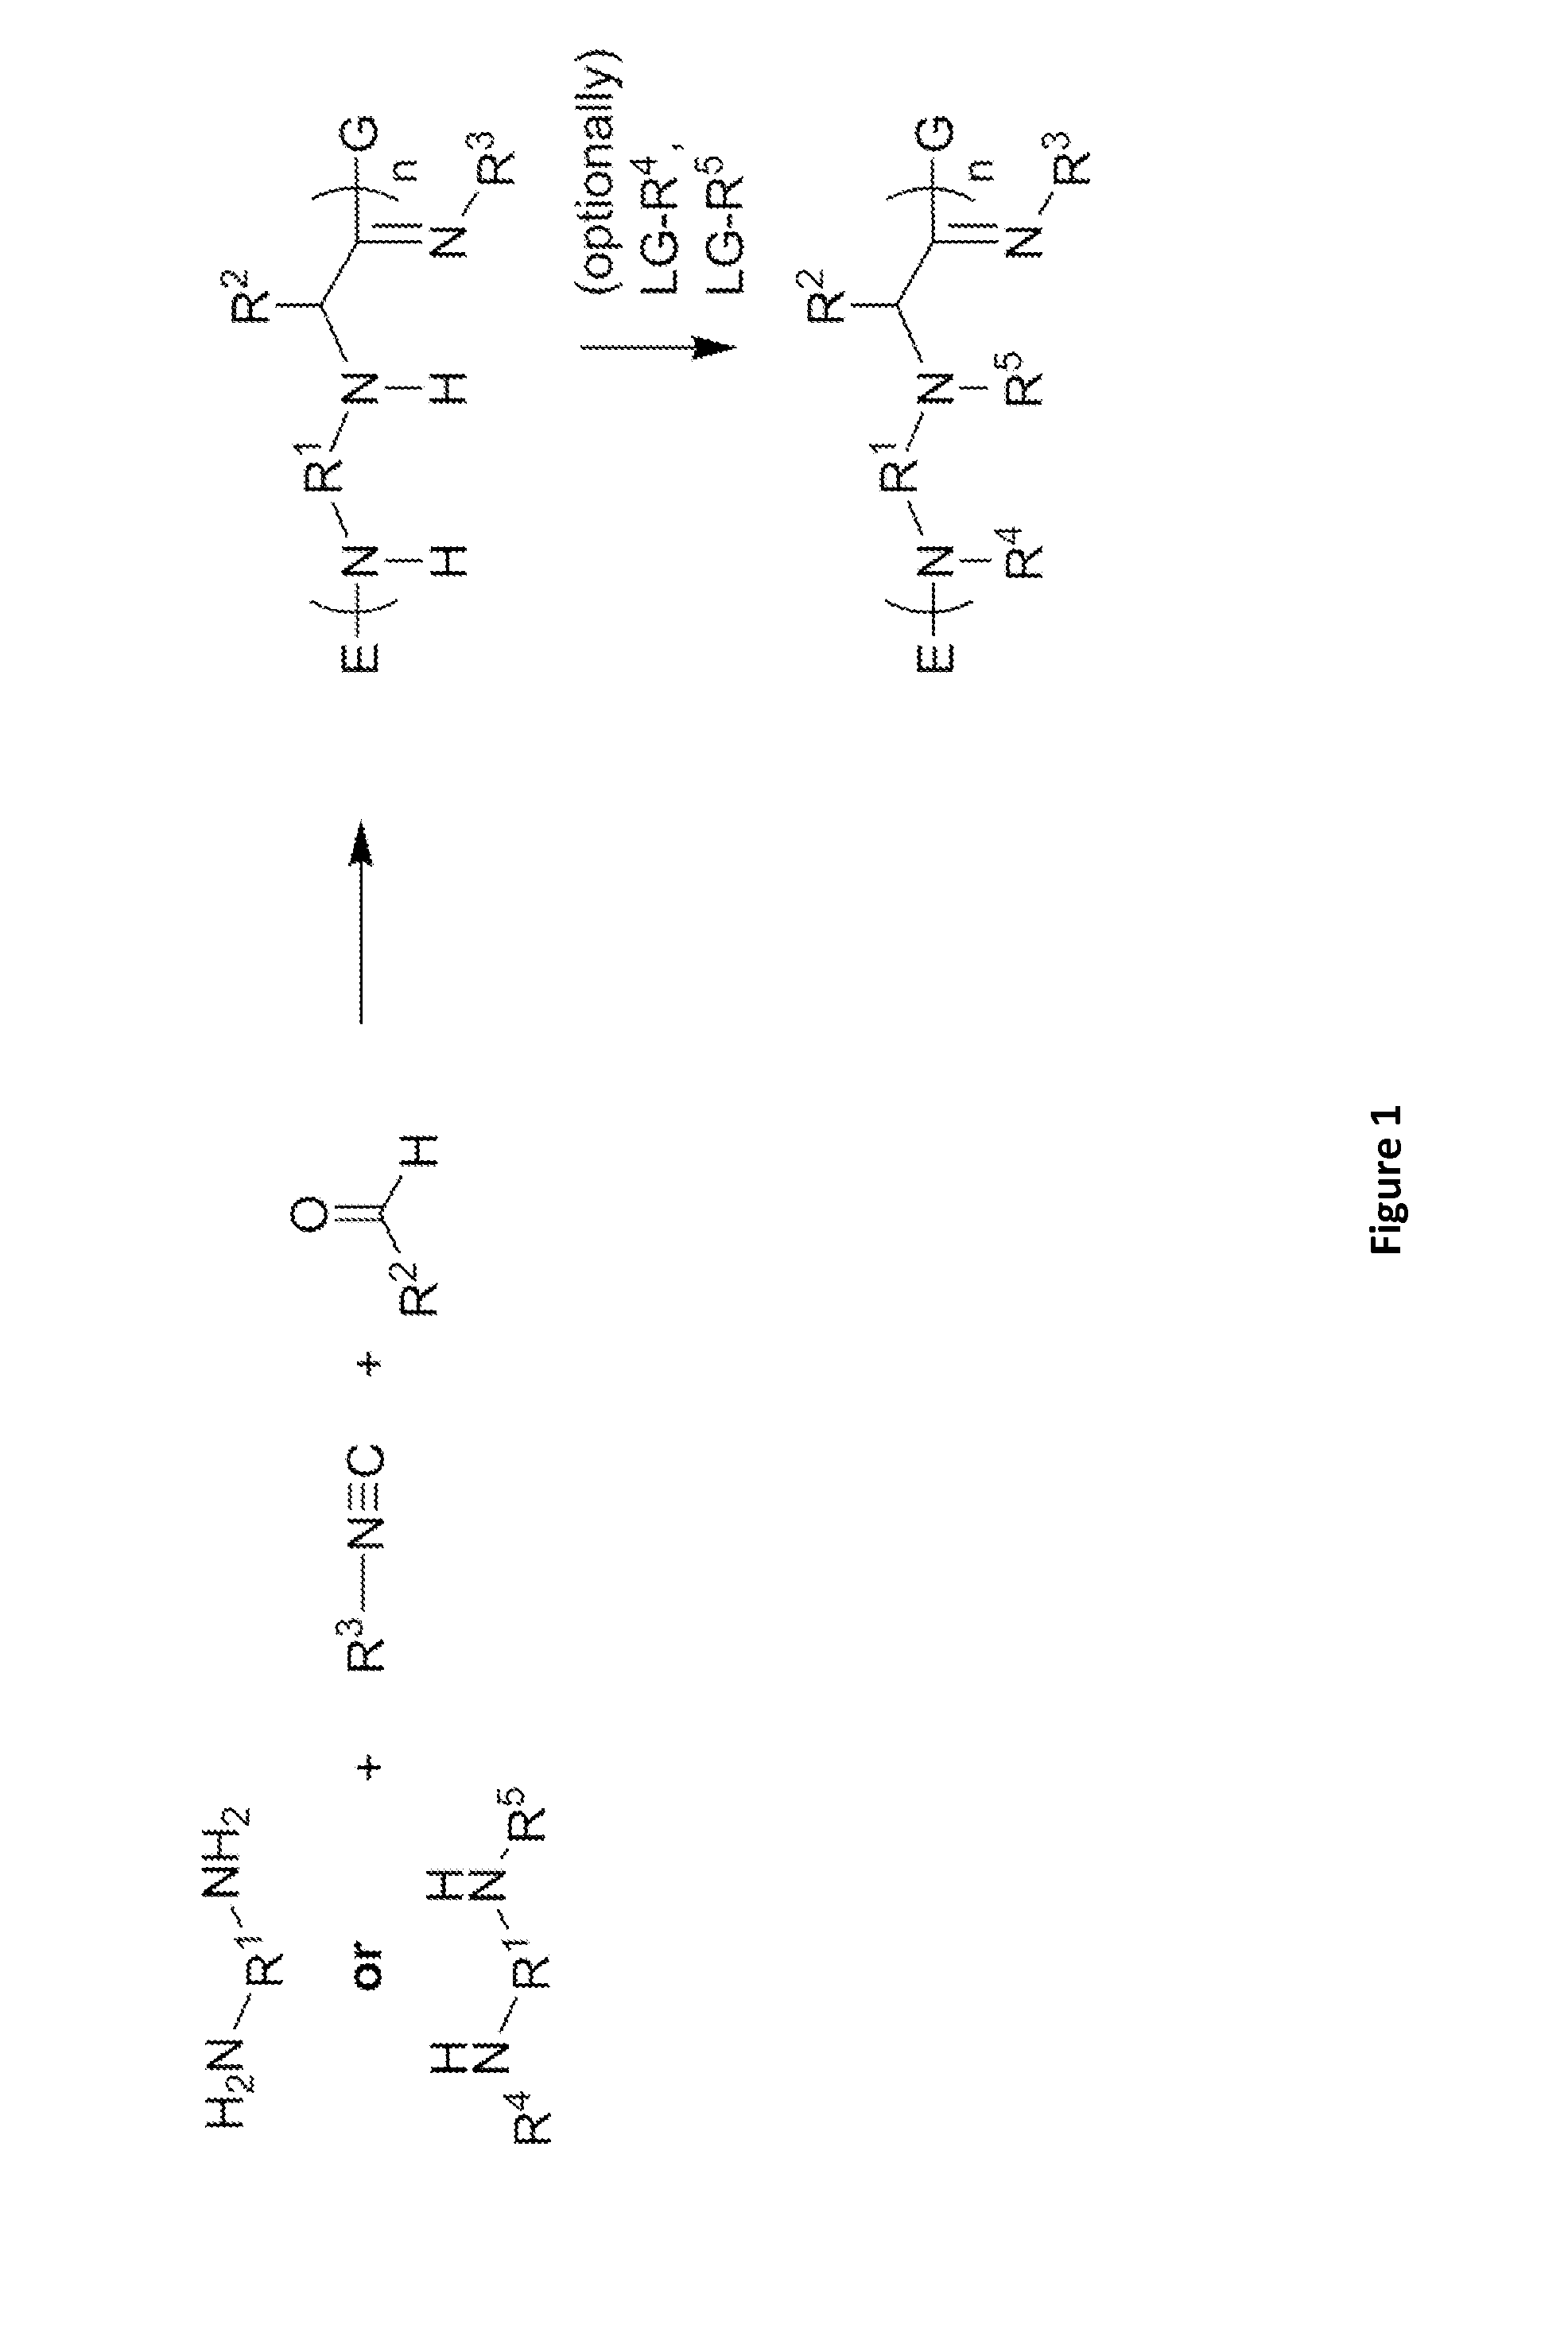 Alpha-aminoamidine polymers and uses thereof